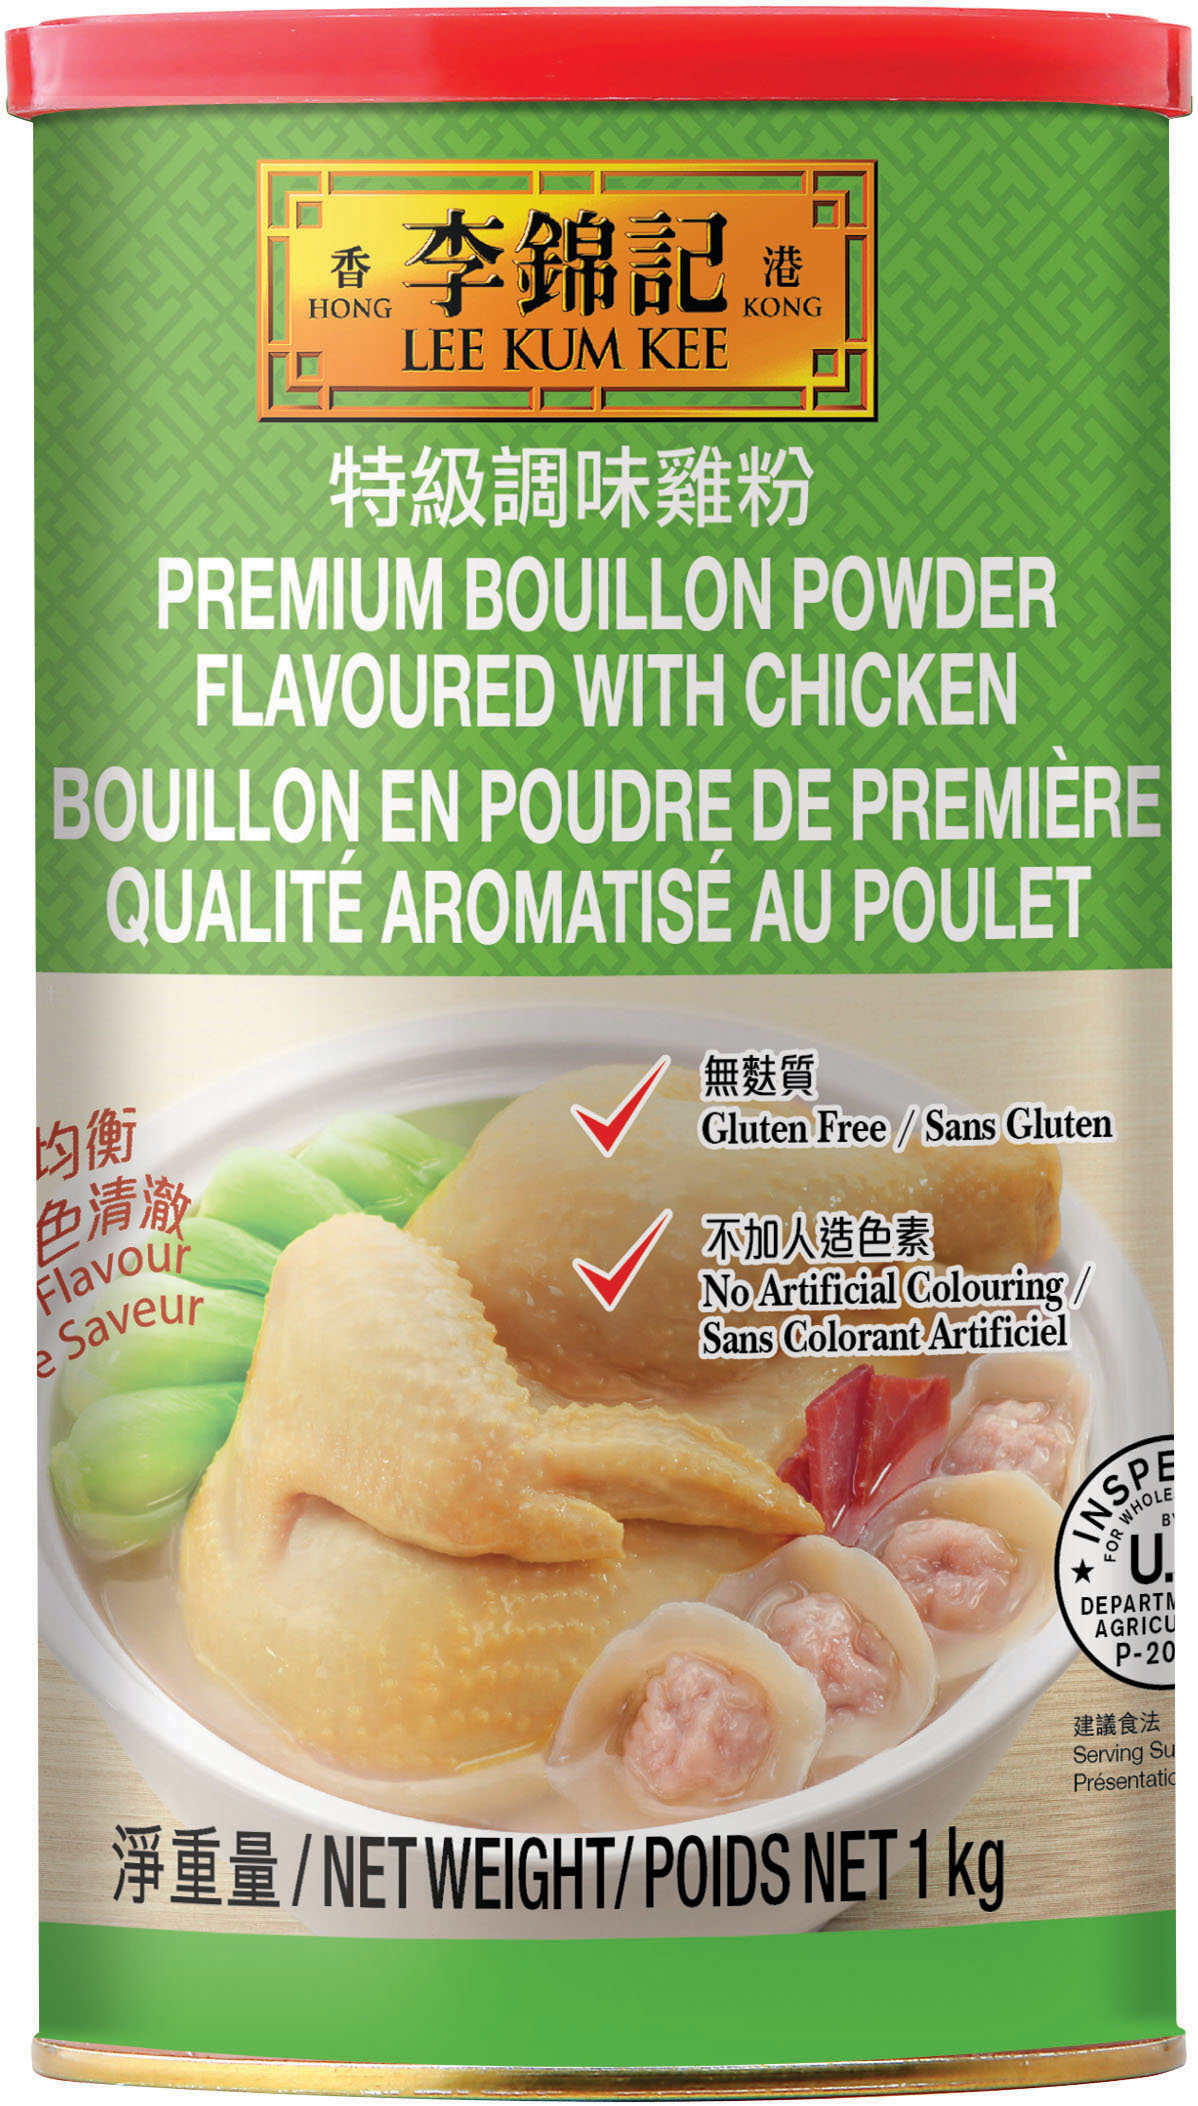 Premium Bouillon Powder Flavoured with Chicken, 1 kg can